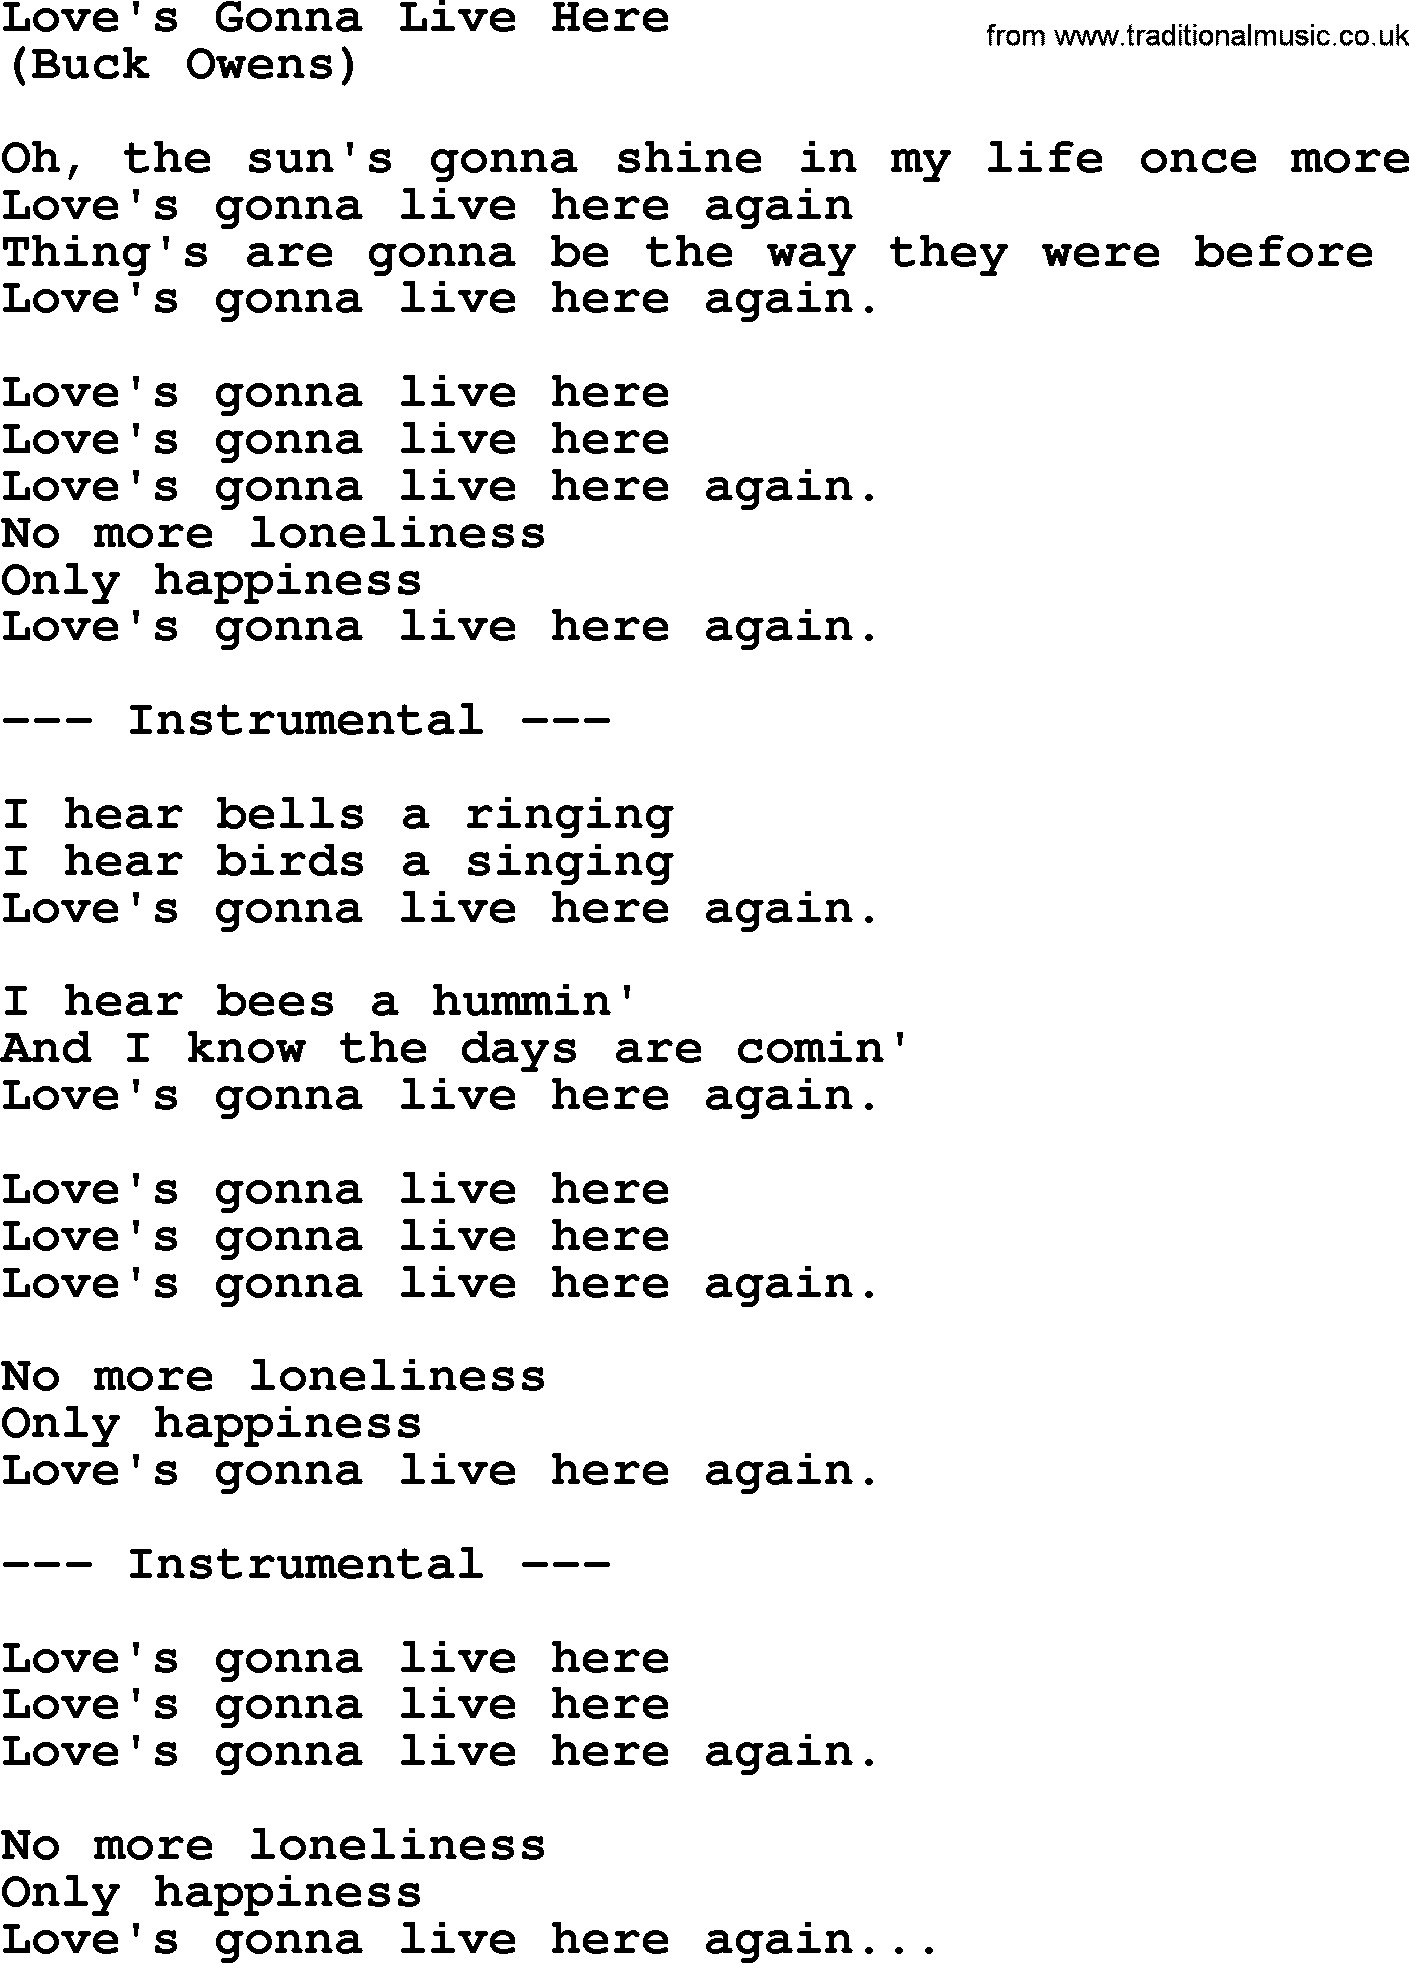 George Jones song: Love's Gonna Live Here, lyrics